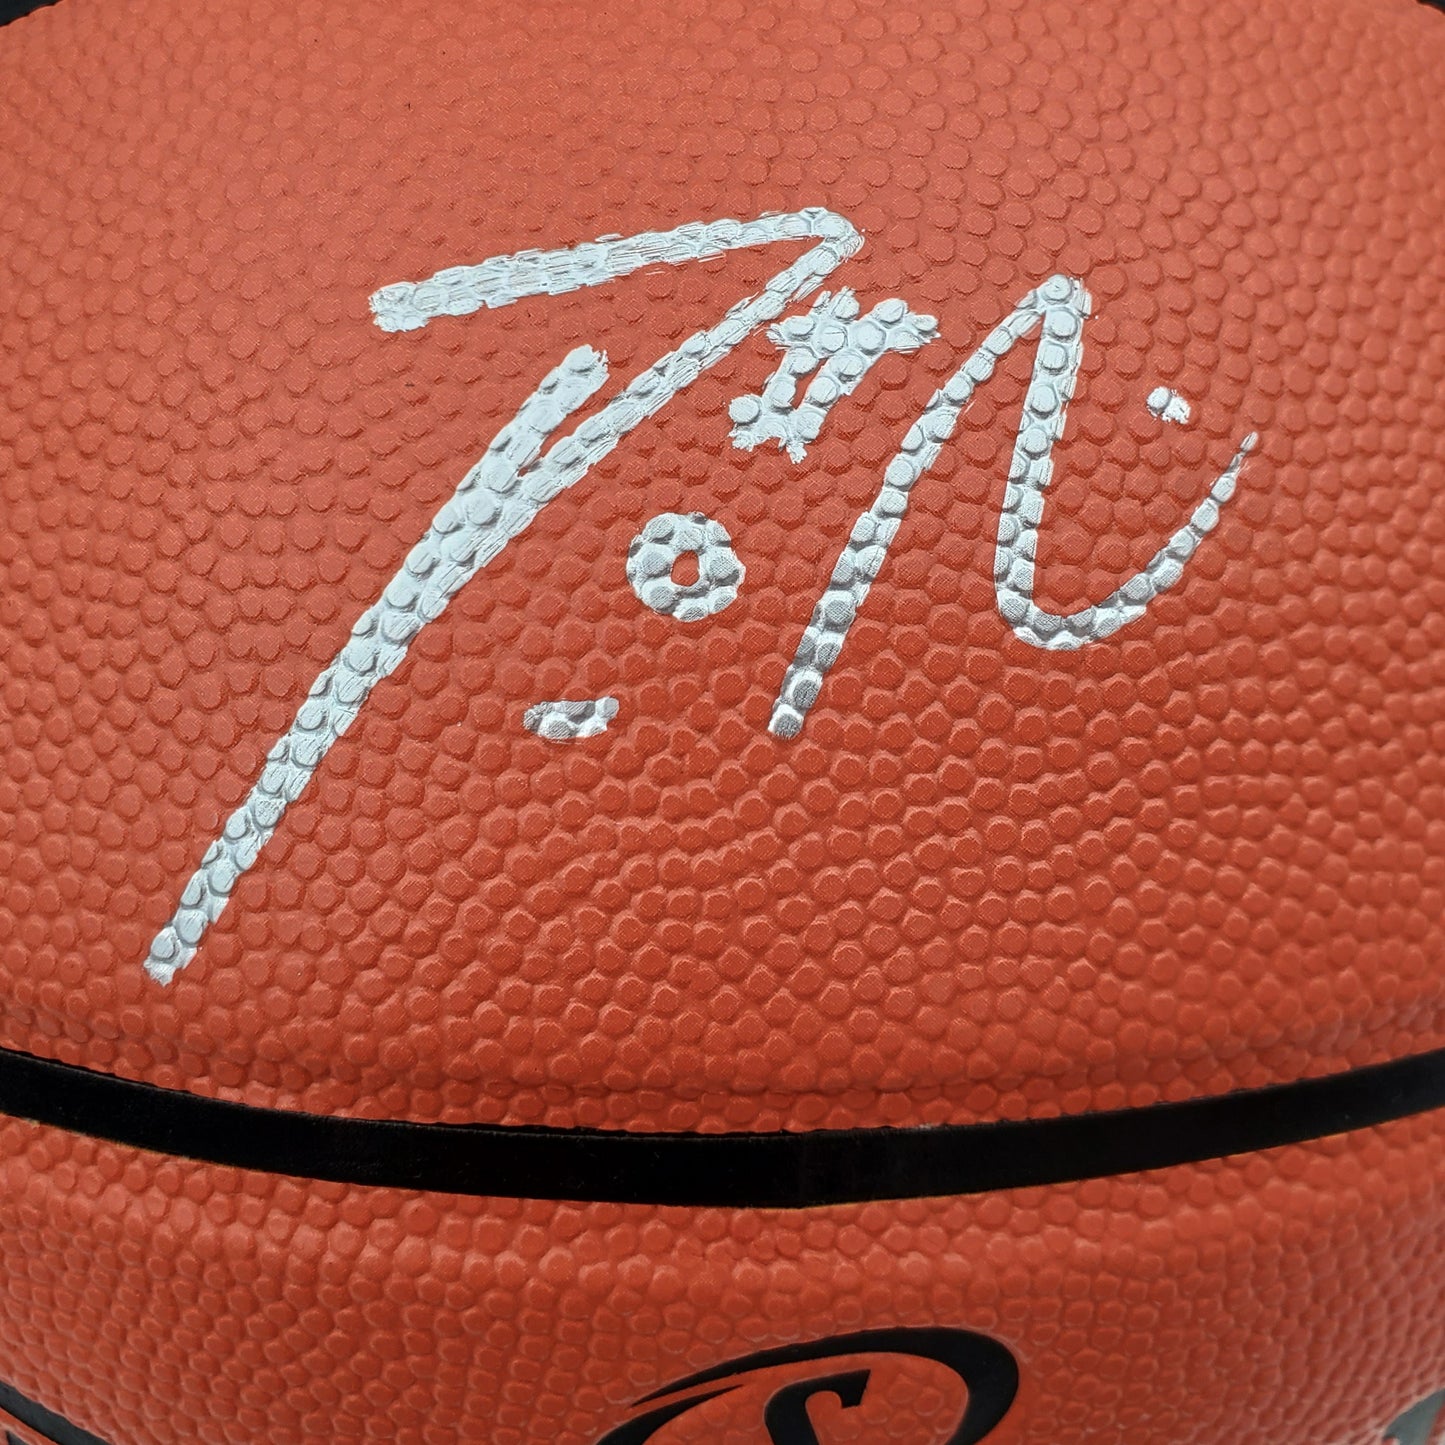 Damian Lillard Autographed NBA Basketball